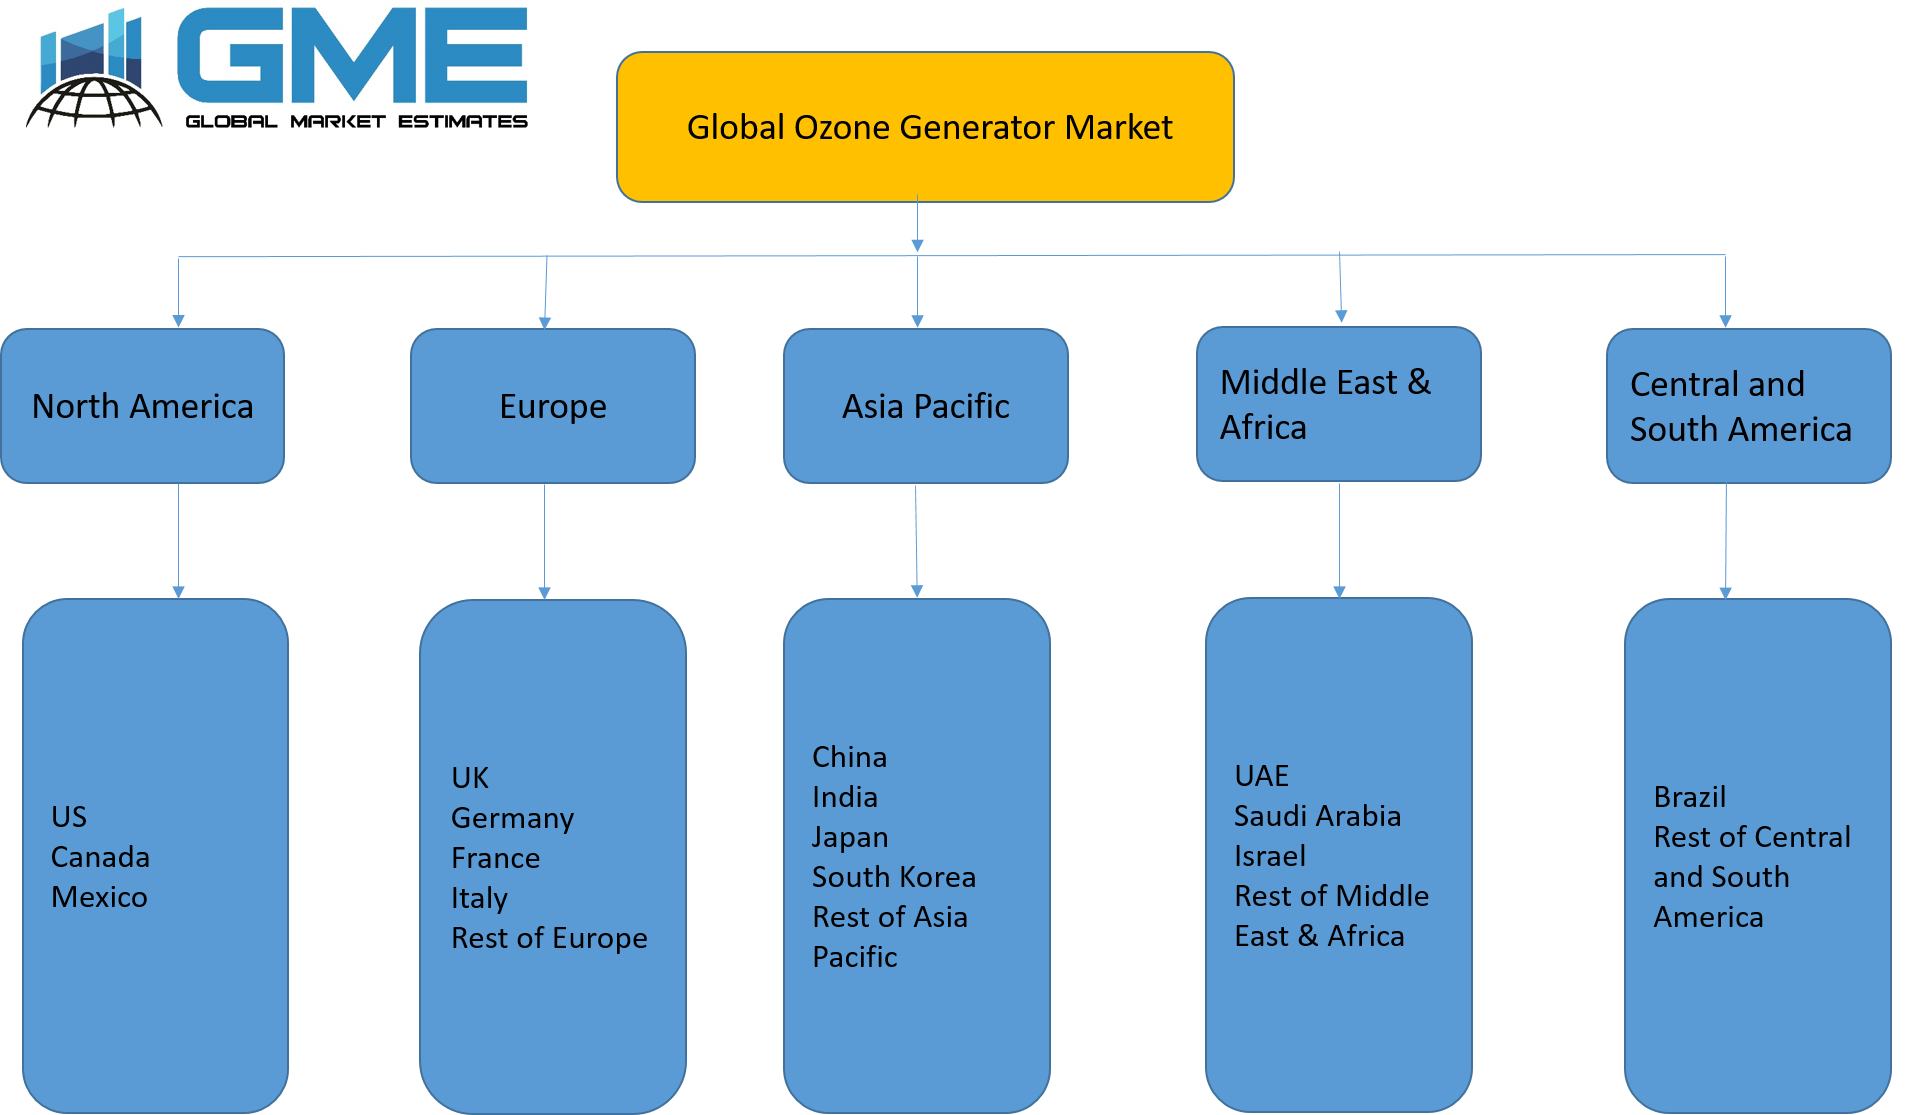 Global Ozone Generator Market - Regional Analysis